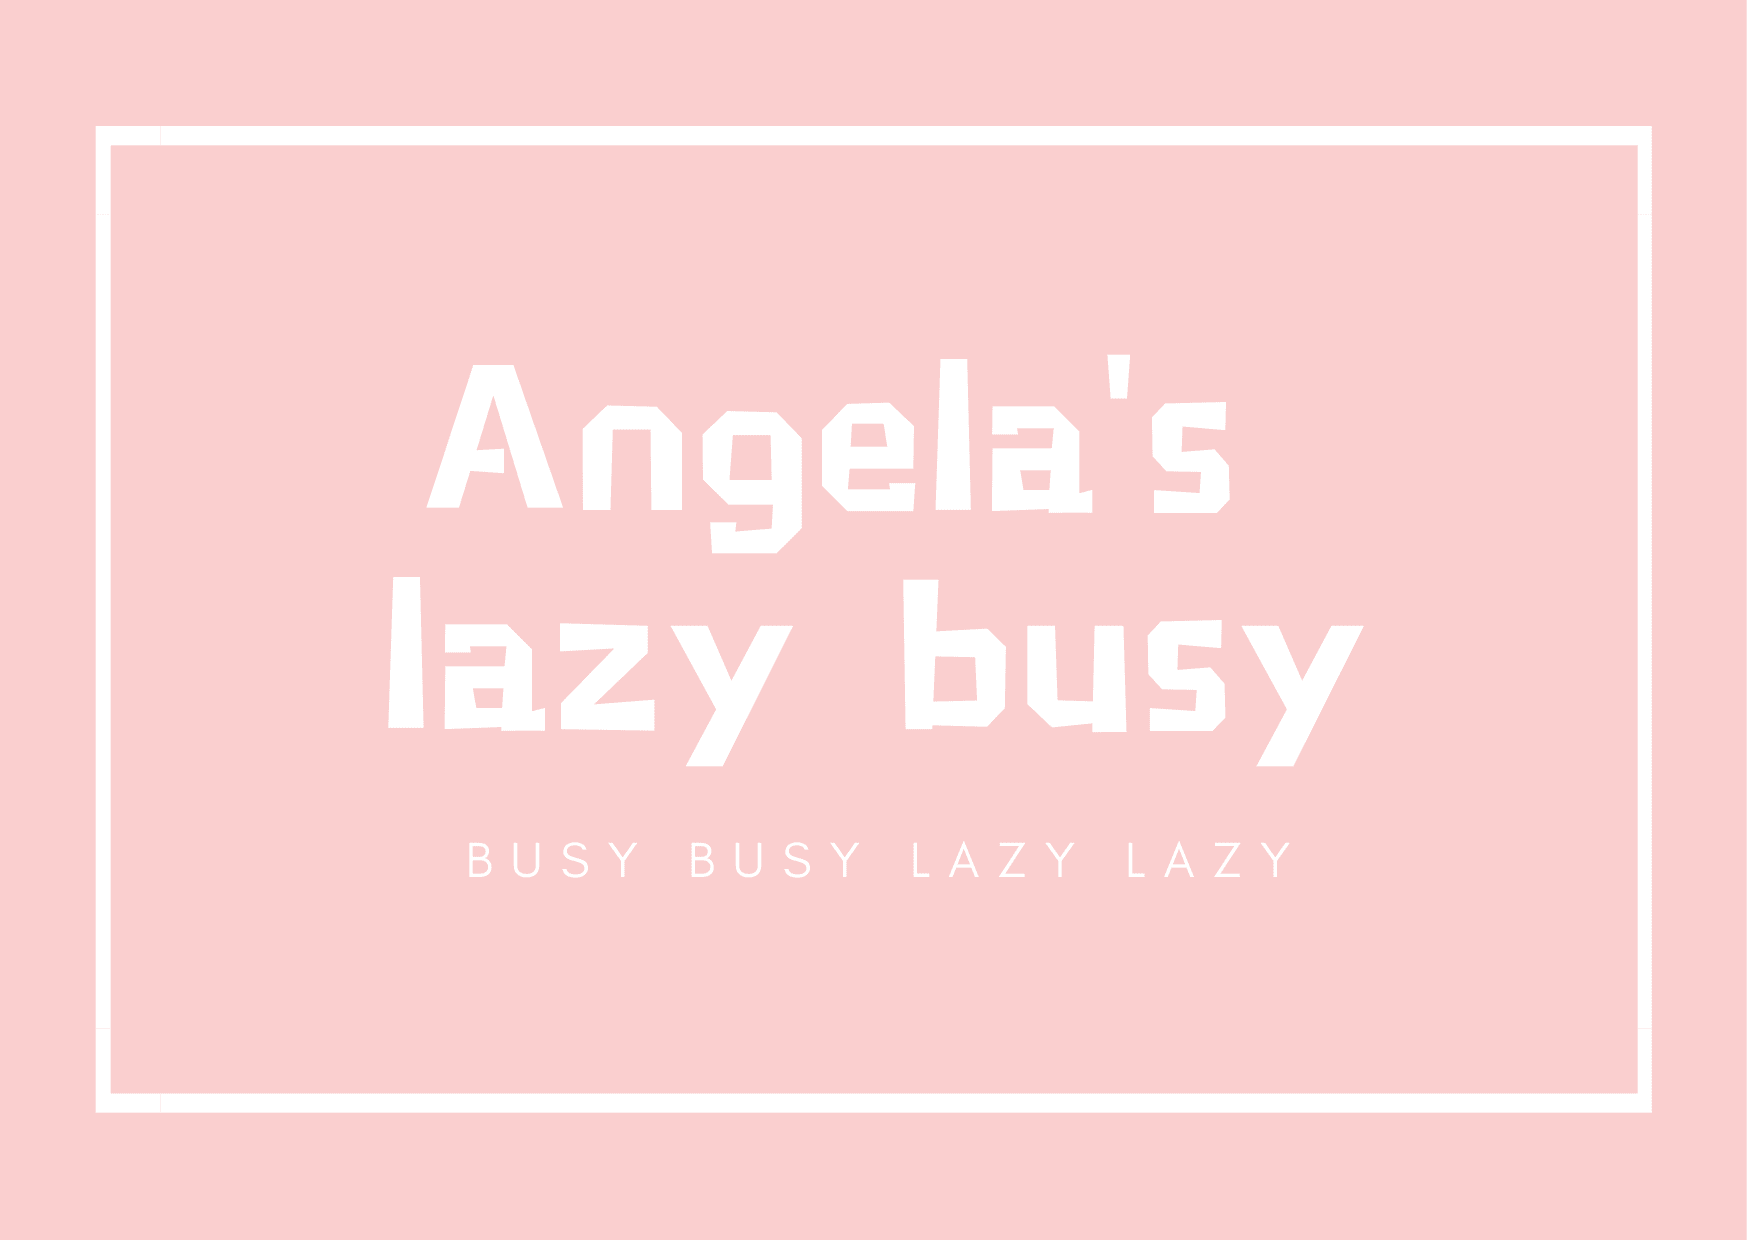 Angela's lazy busy